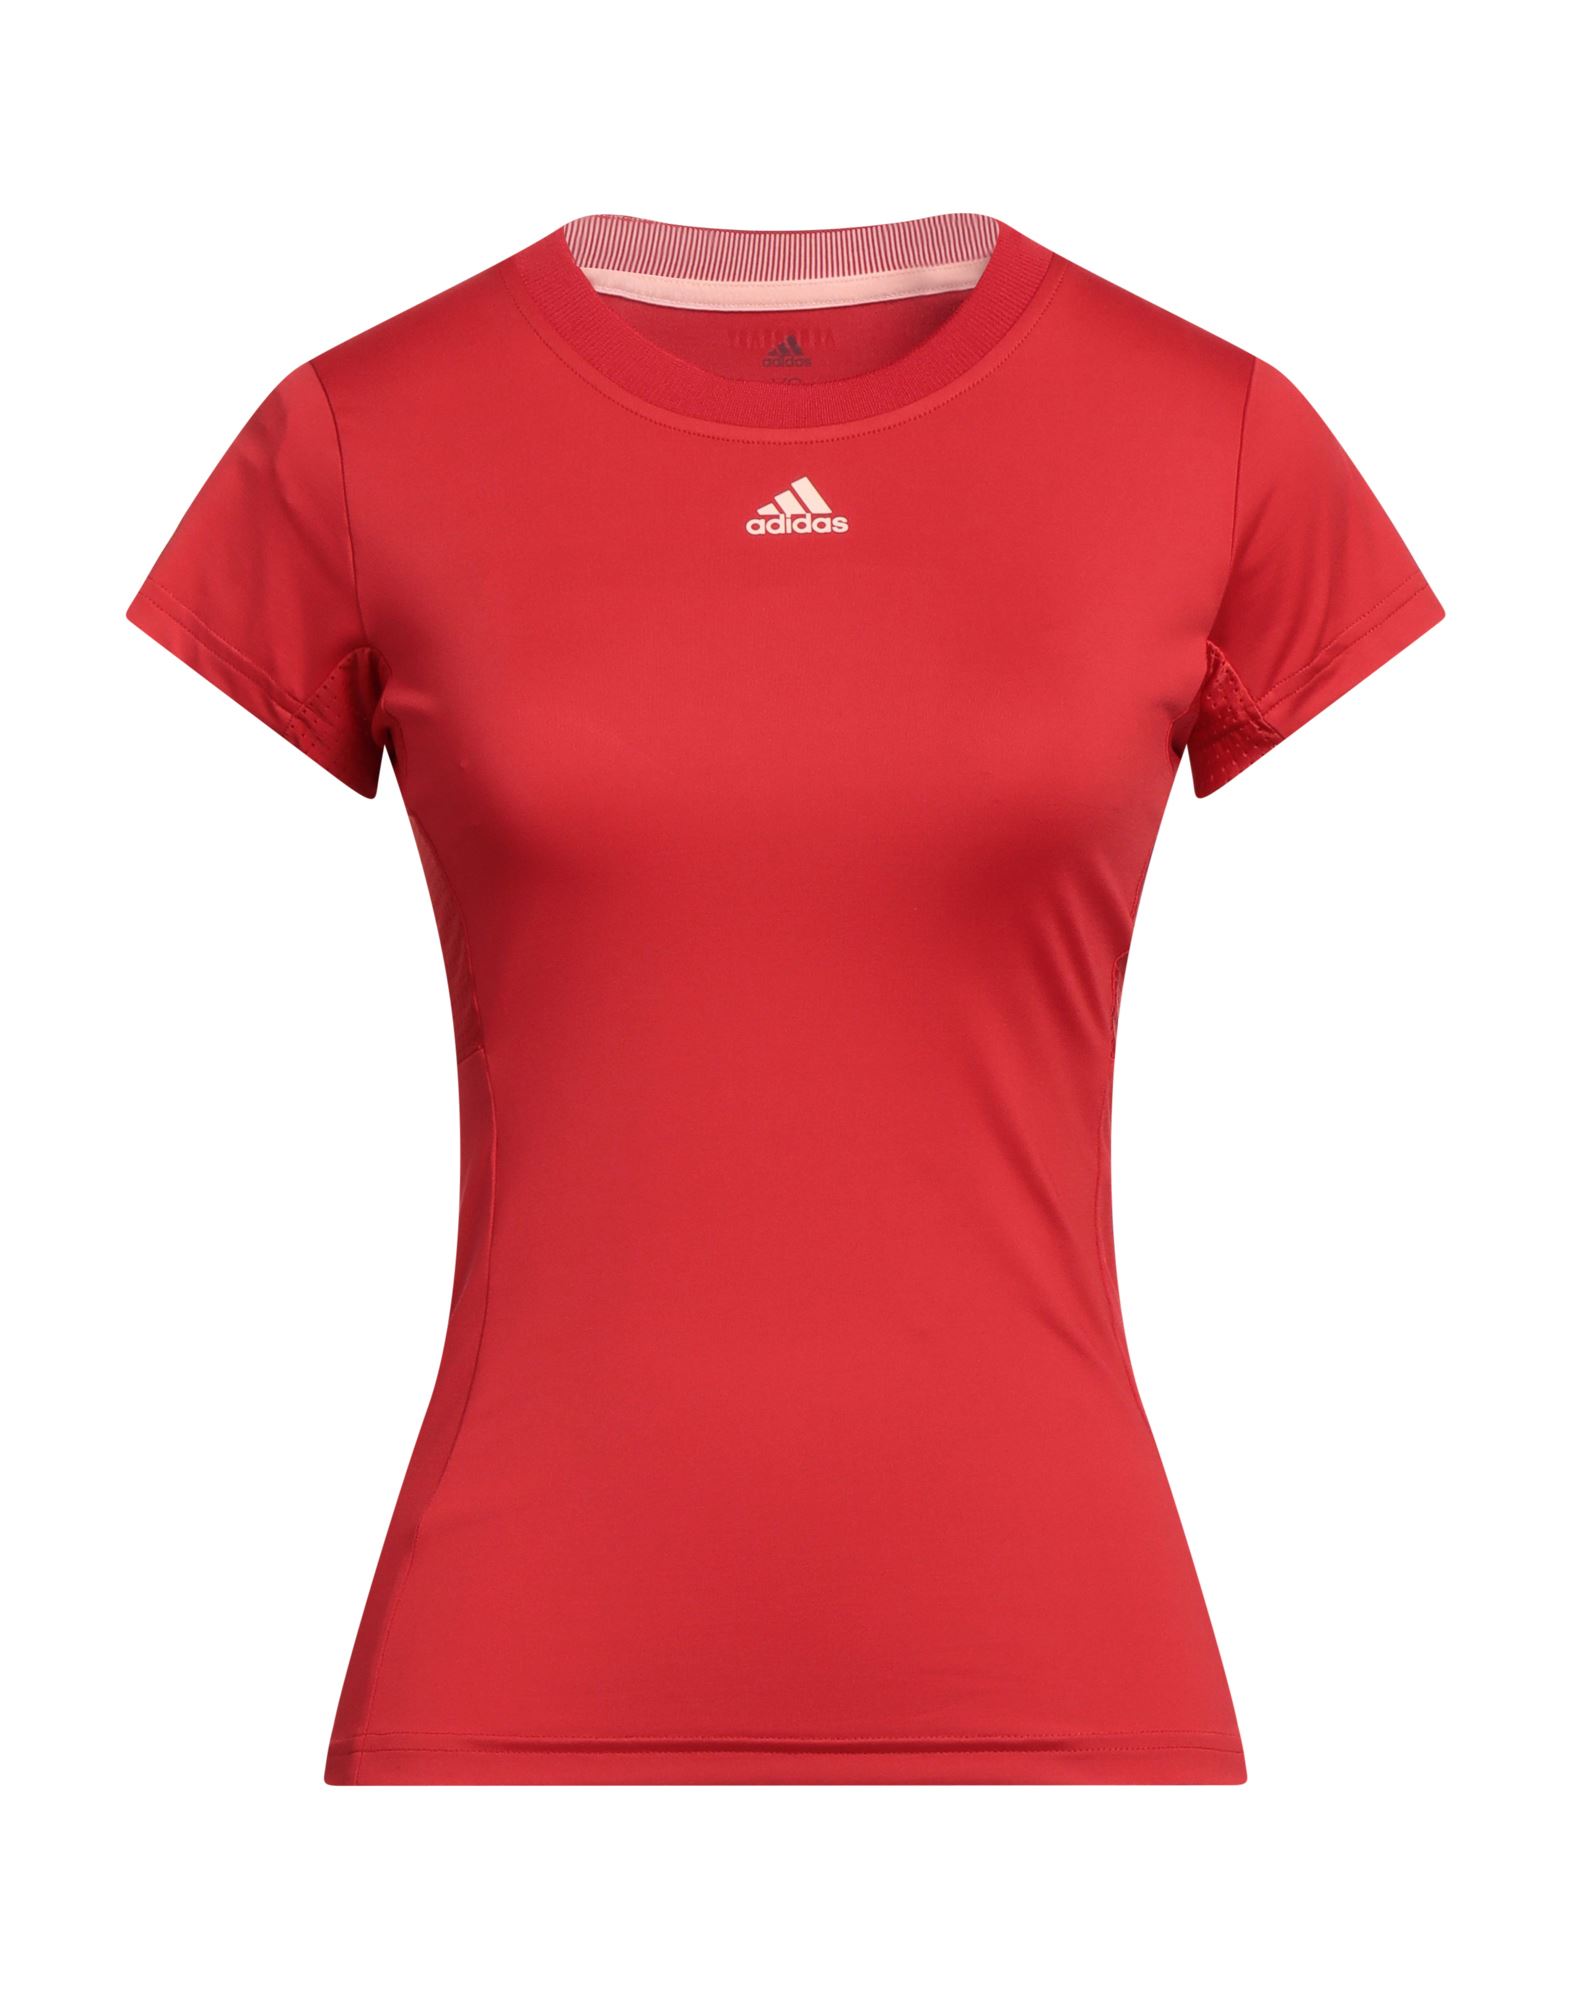 Adidas Originals T-shirts In Red